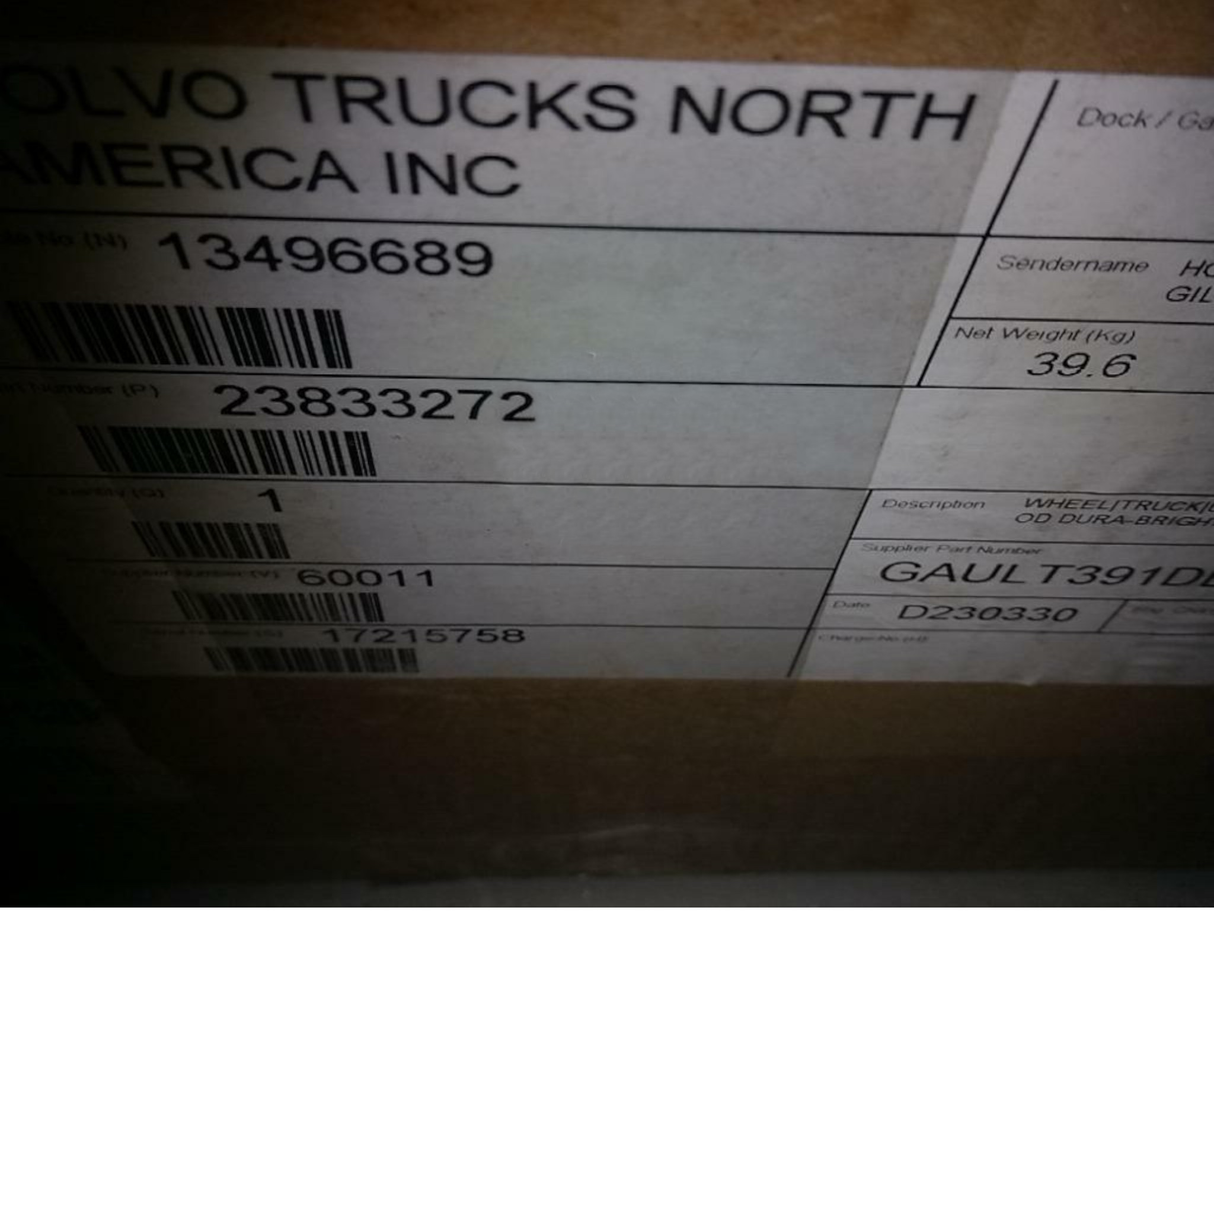 23833272 Genuine Volvo Disc Wheel